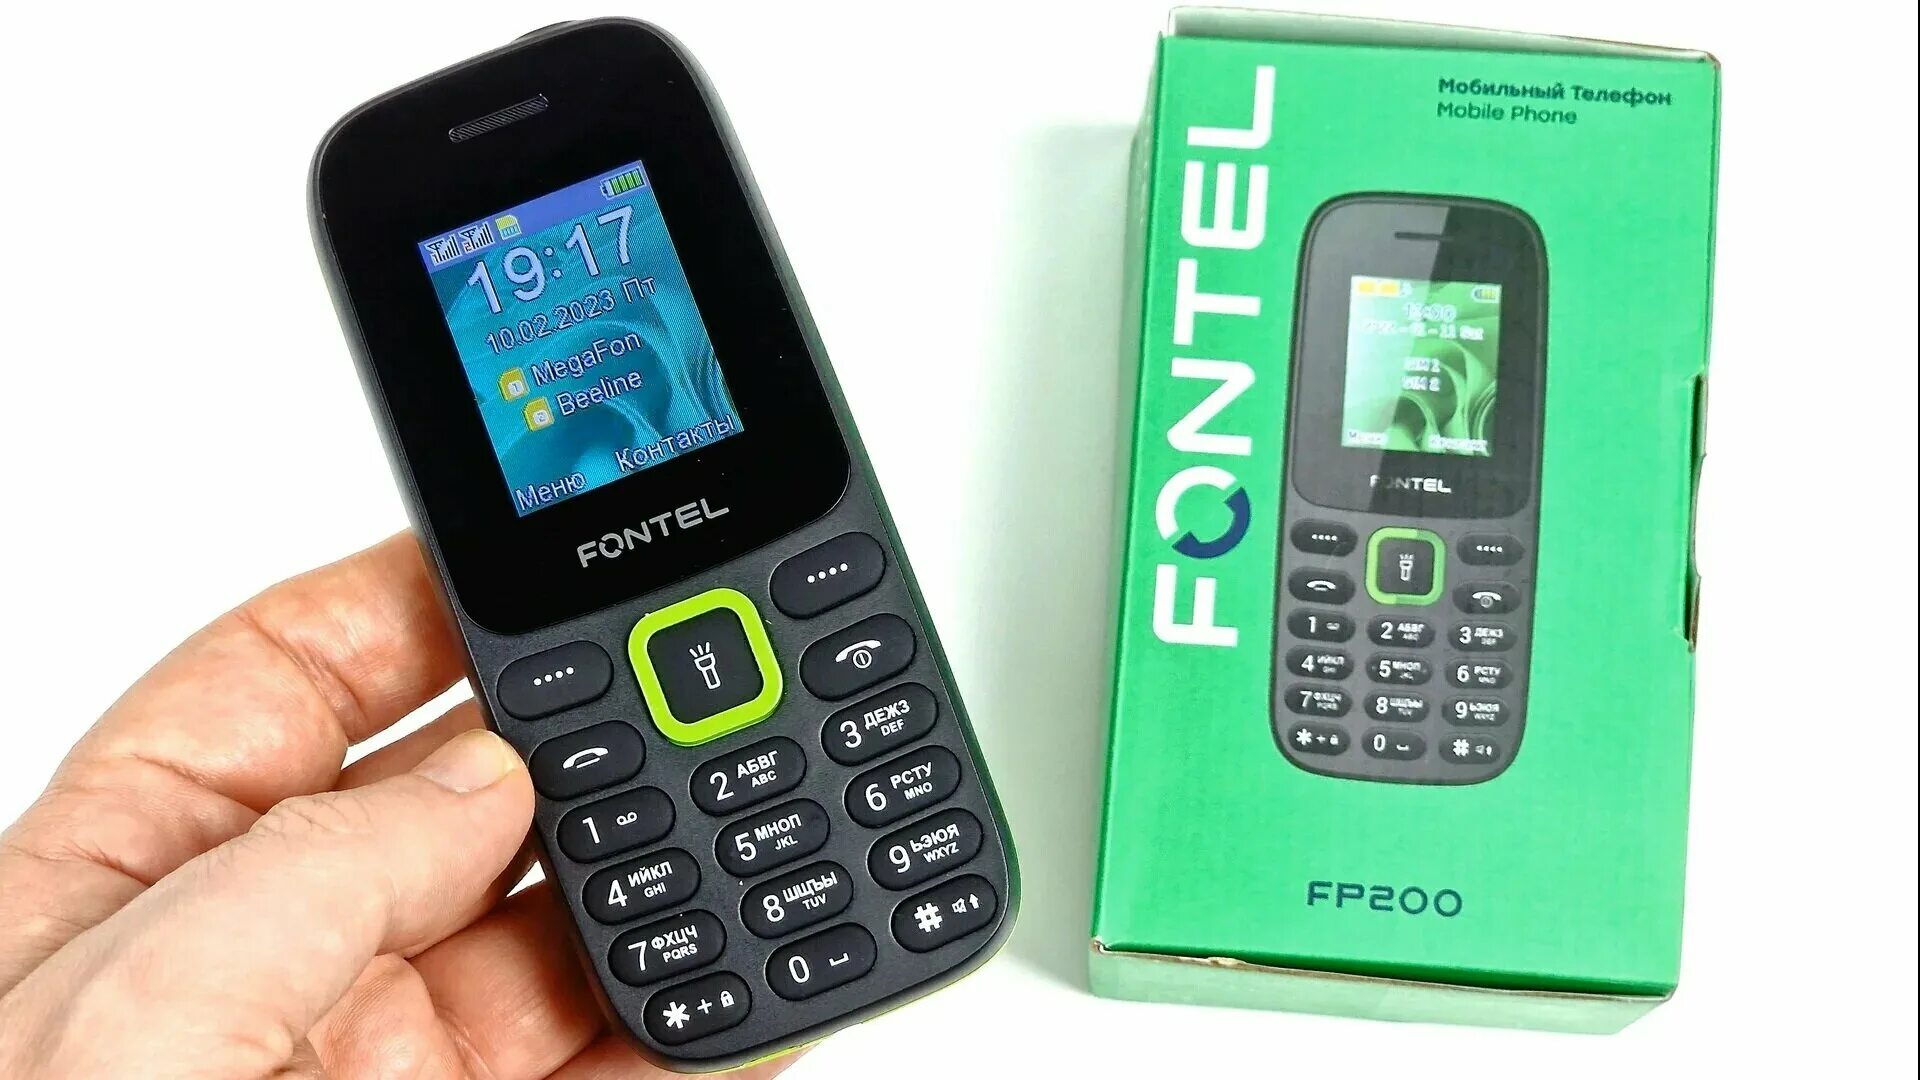 Телефон за 200 рублей. Фонтел фп200. Телефон FONTEL FP 200. Первый смартфон.